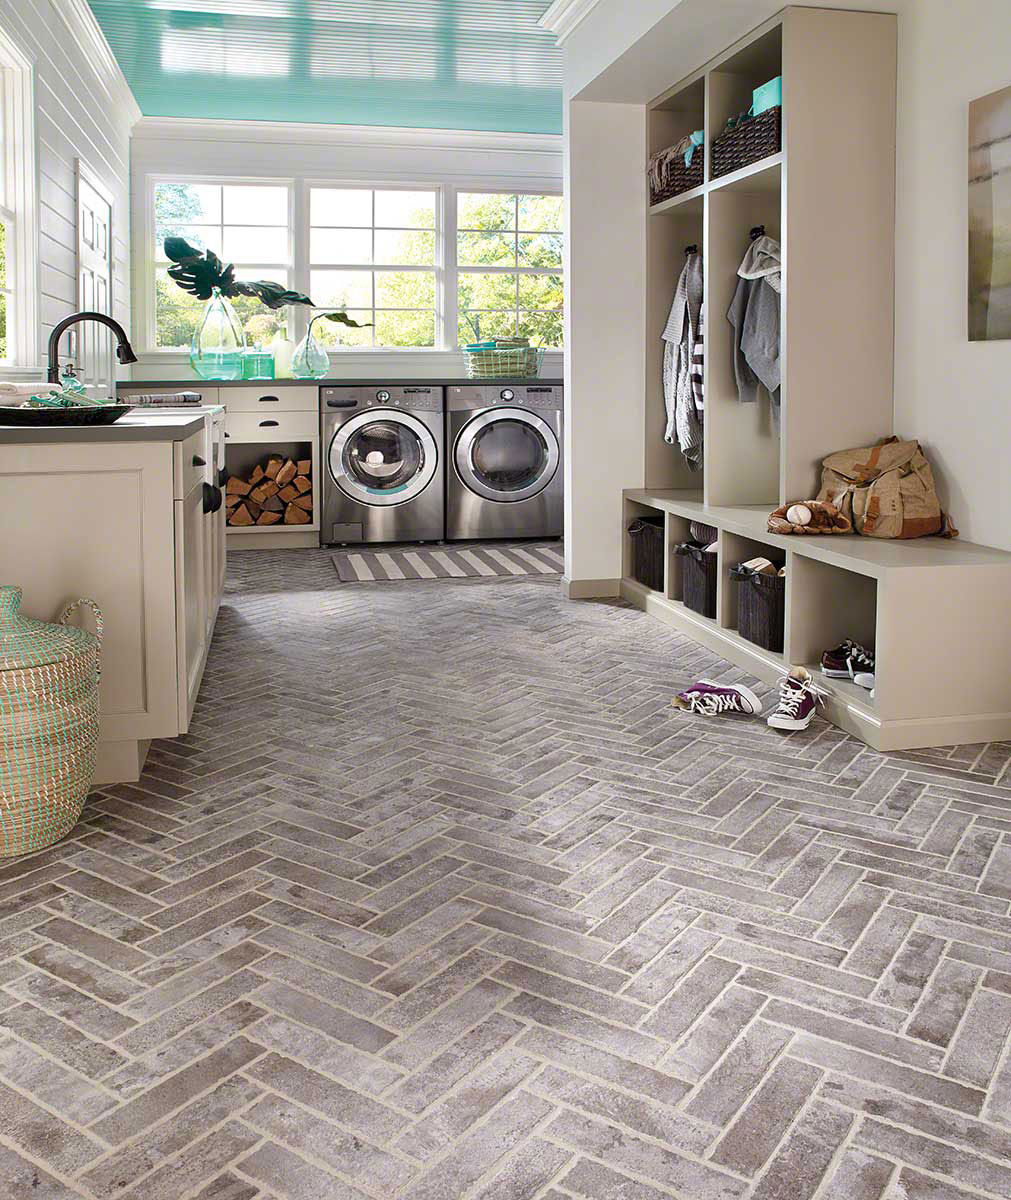 Brickstone Taupe 2x10 Brick Tile floor in laundry area